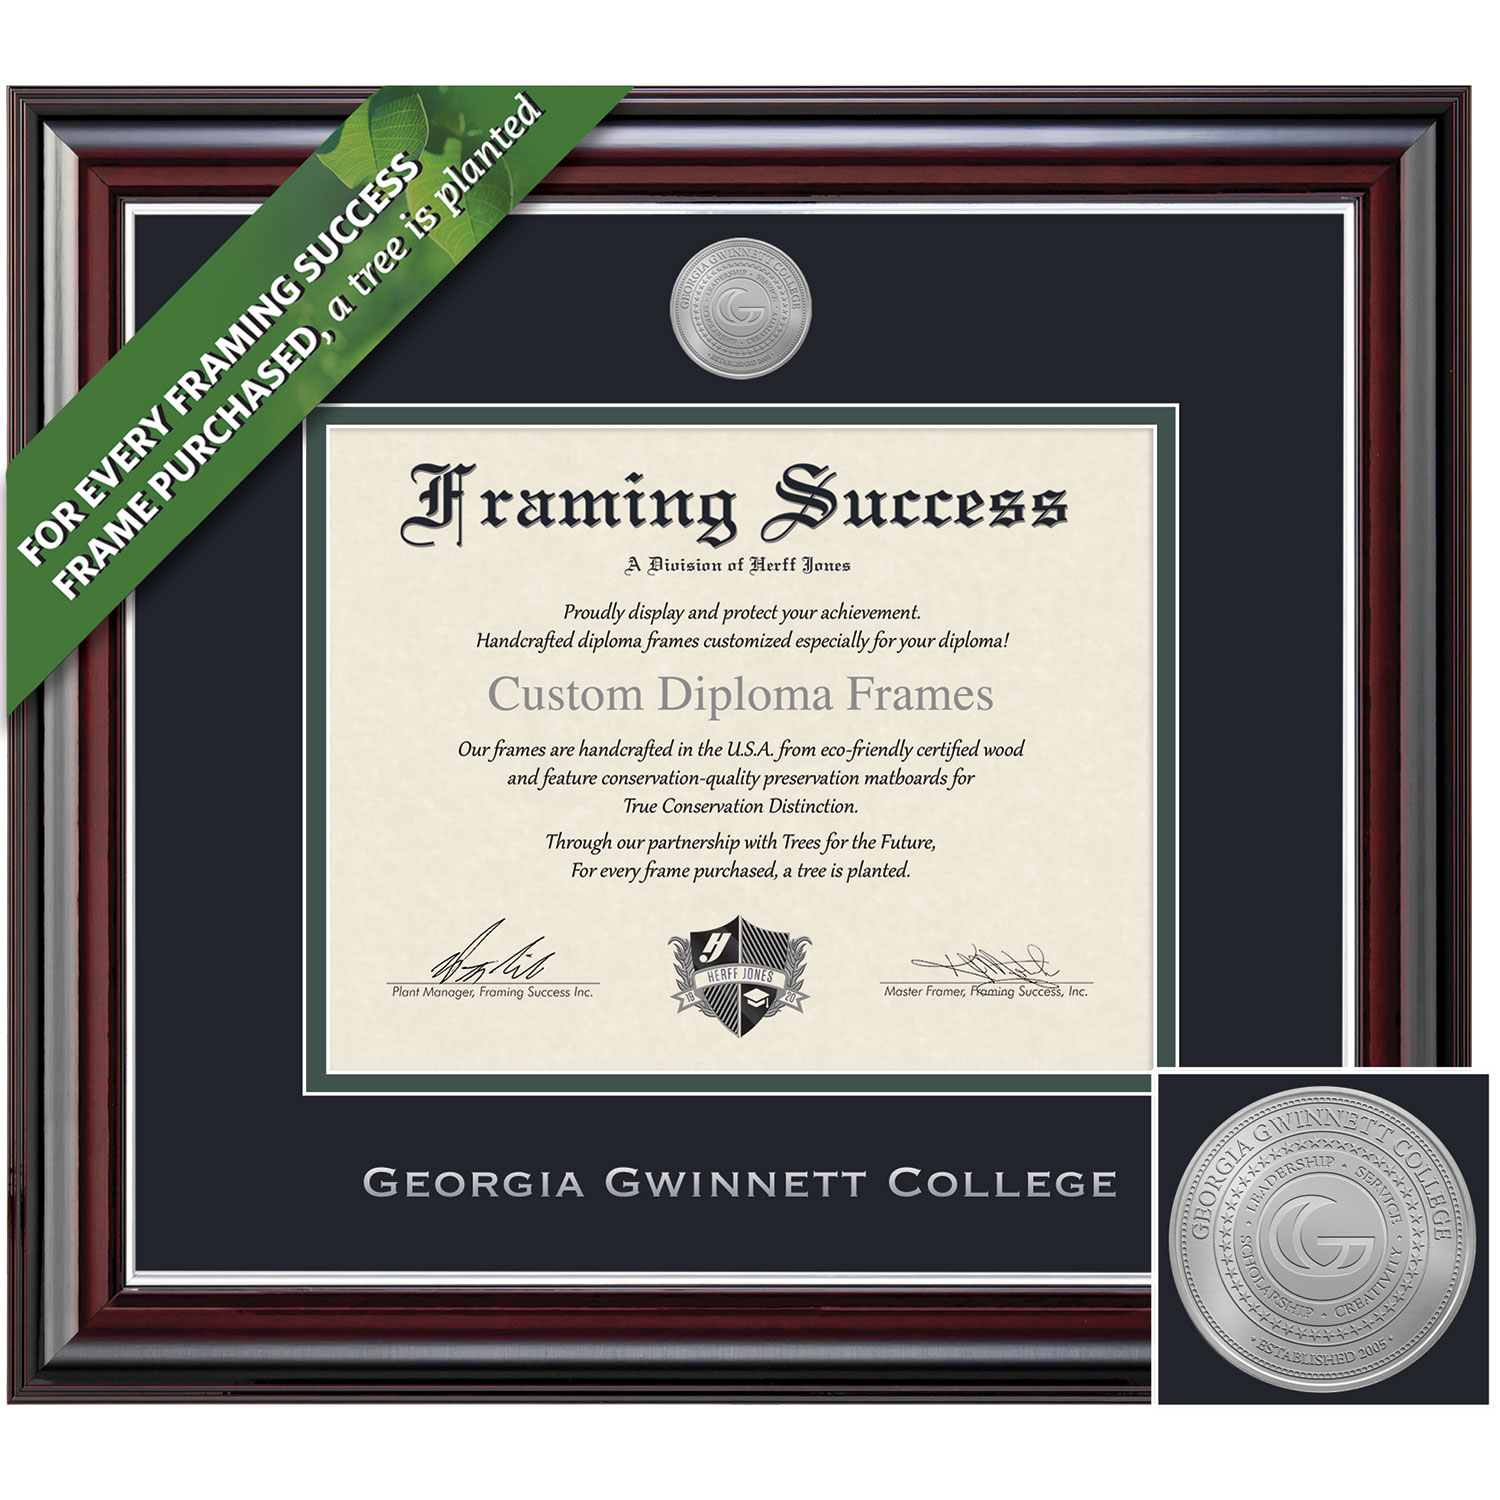 Framing Success 11 x 14 Jefferson Silver Medallion Bachelors Diploma Frame